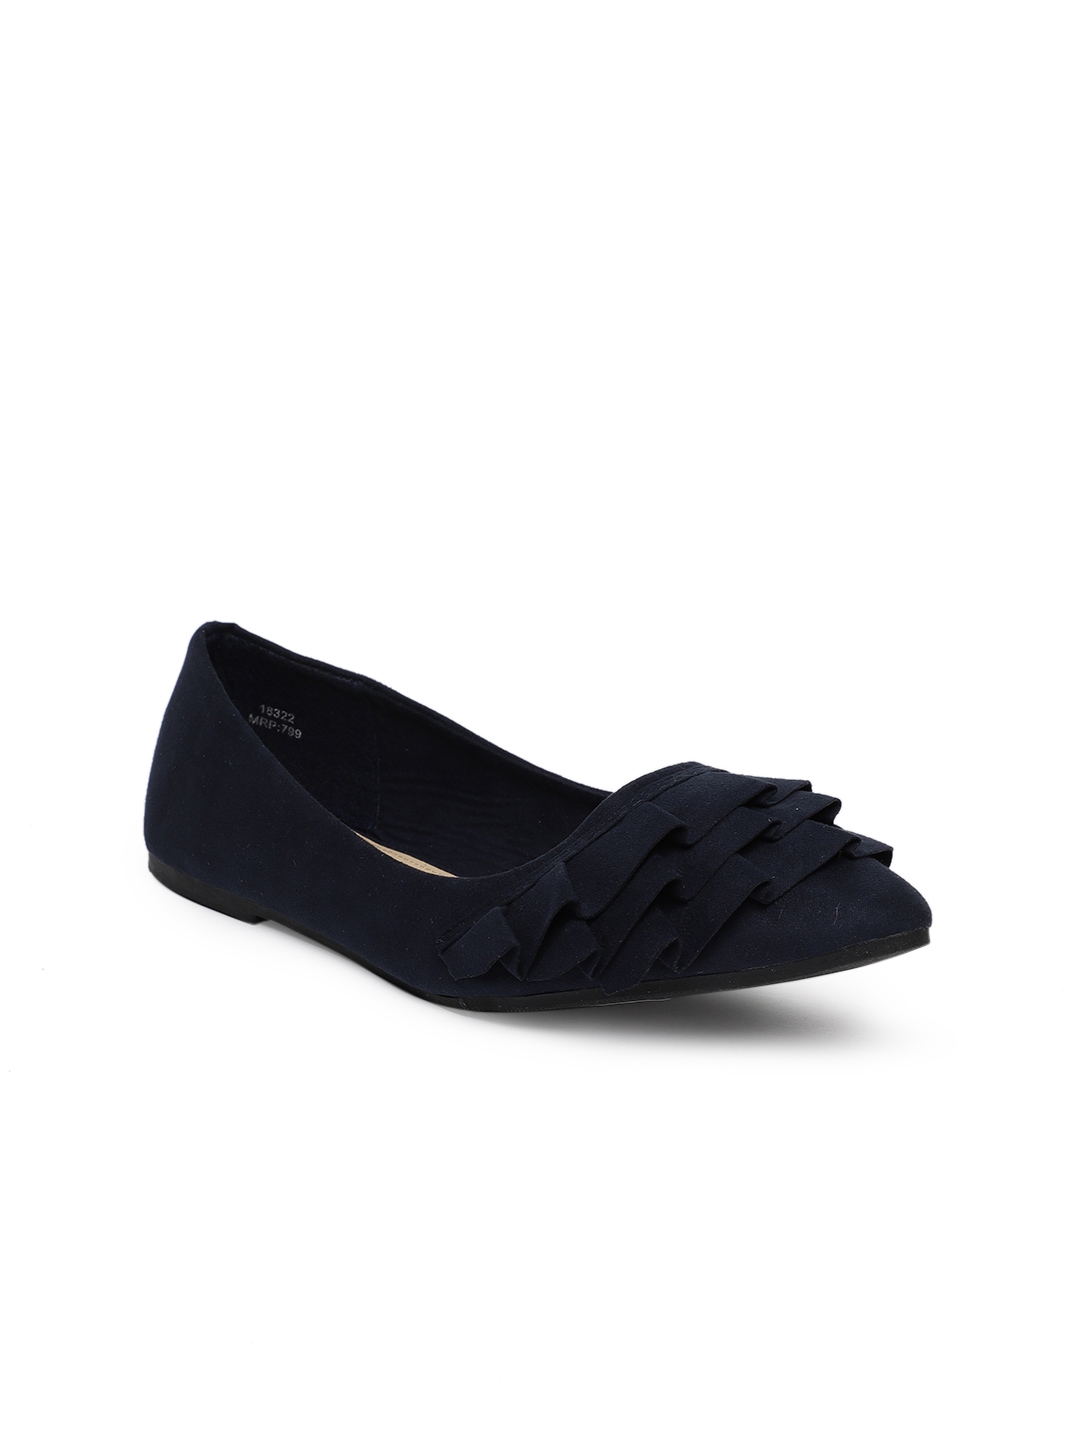 navy blue flat shoes womens